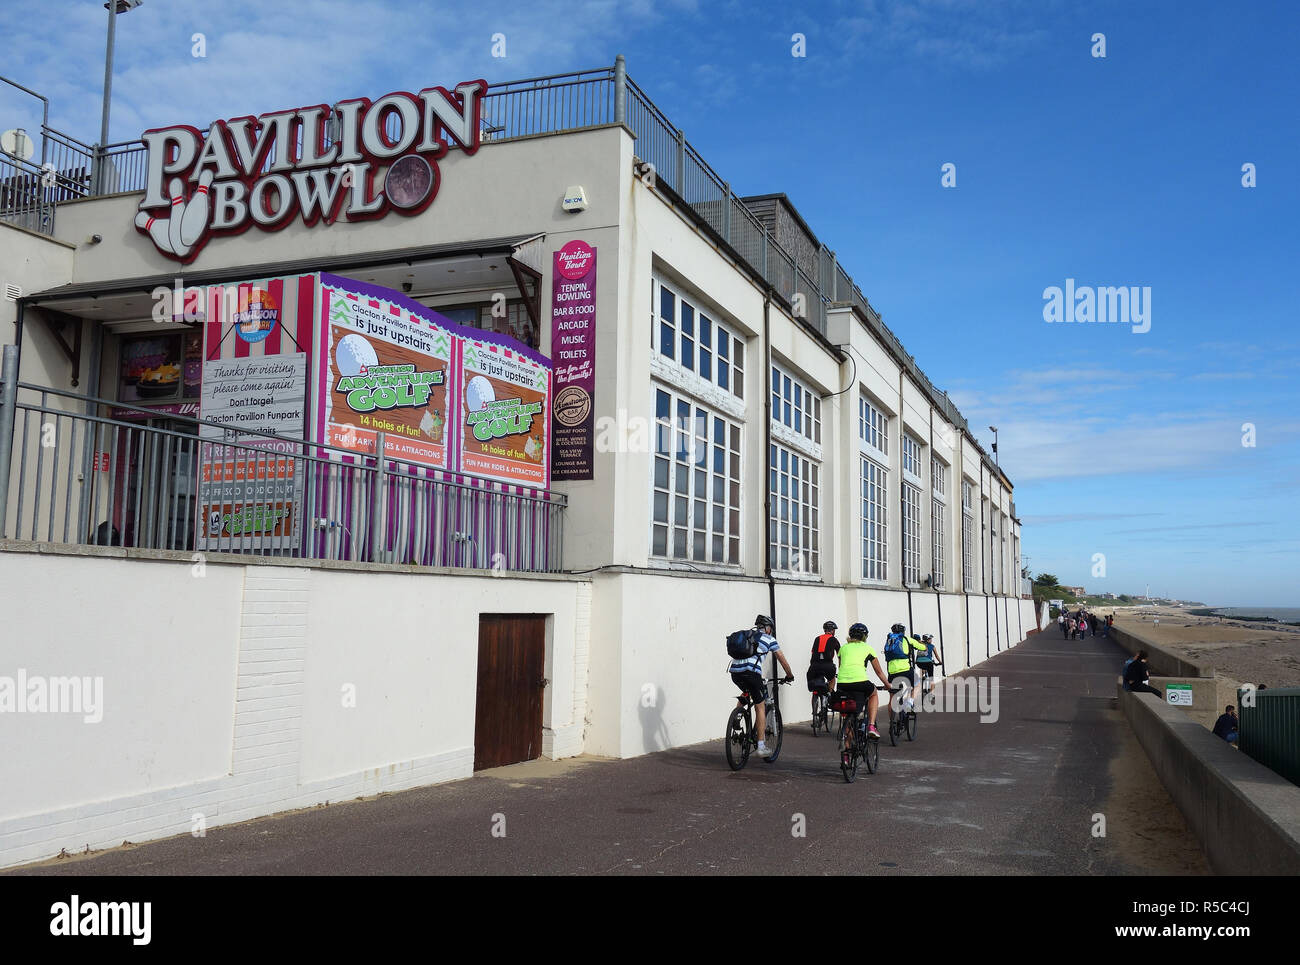 Pavilion Bowls, Clacton-on-Sea, Essex, England, UK Stock Photo